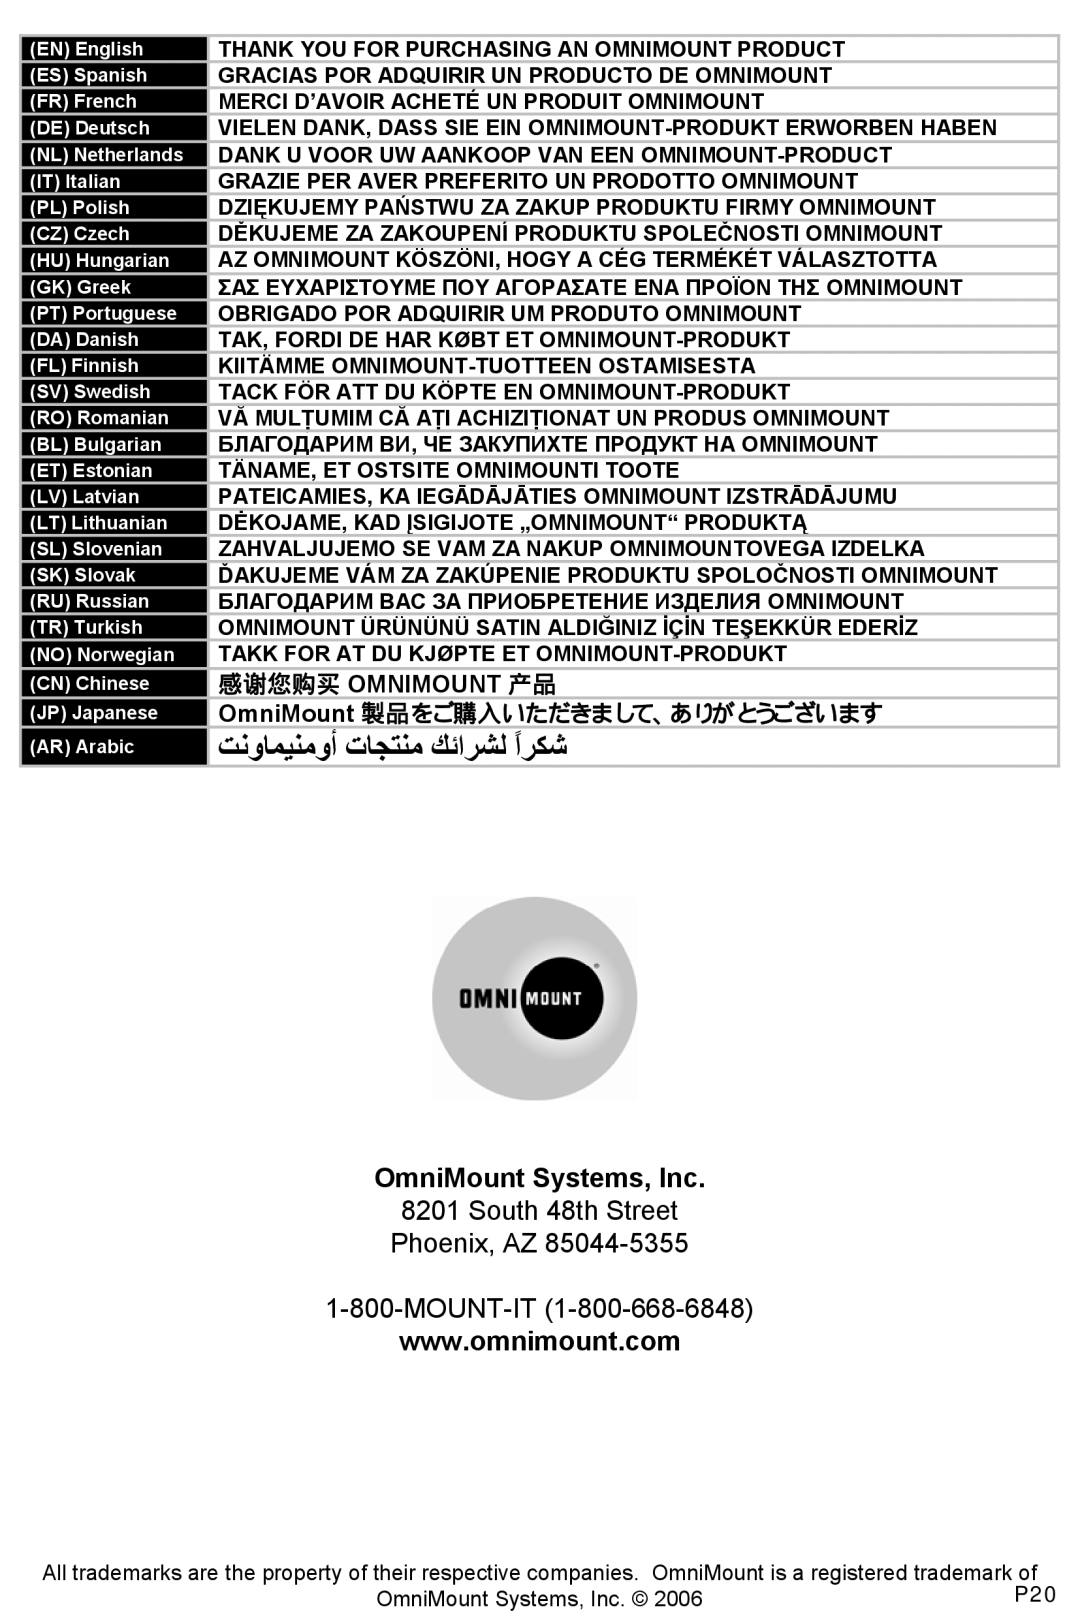 Omnimount QM200-F, 10041 manual OmniMount Systems, Inc, ﺖﻧوﺎﻤﻴﻨﻣوأ تﺎﺠﺘﻨﻣ ﻚﺋاﺮﺸﻟ اﺮﻜﺷً, 感谢您购买 Omnimount 产品 